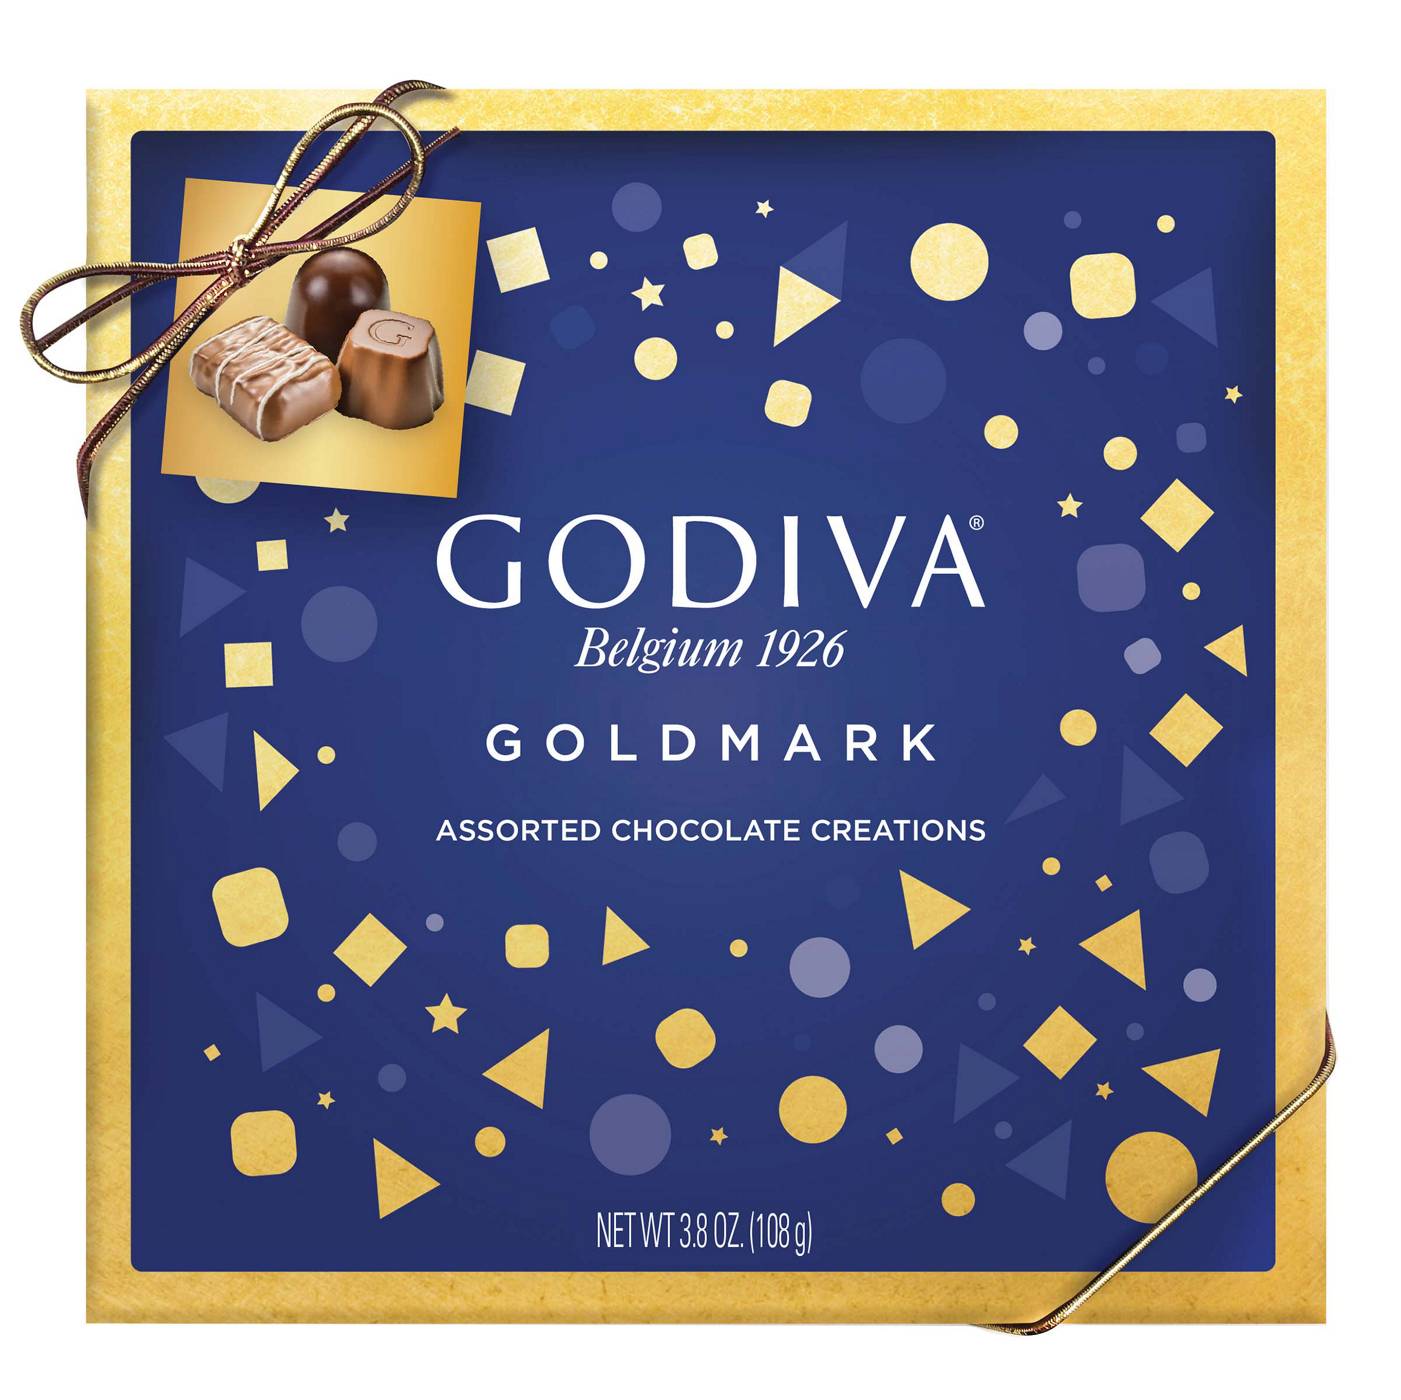 Godiva Goldmark Assorted Chocolate Creations Gift Box - 9 Pc; image 1 of 2